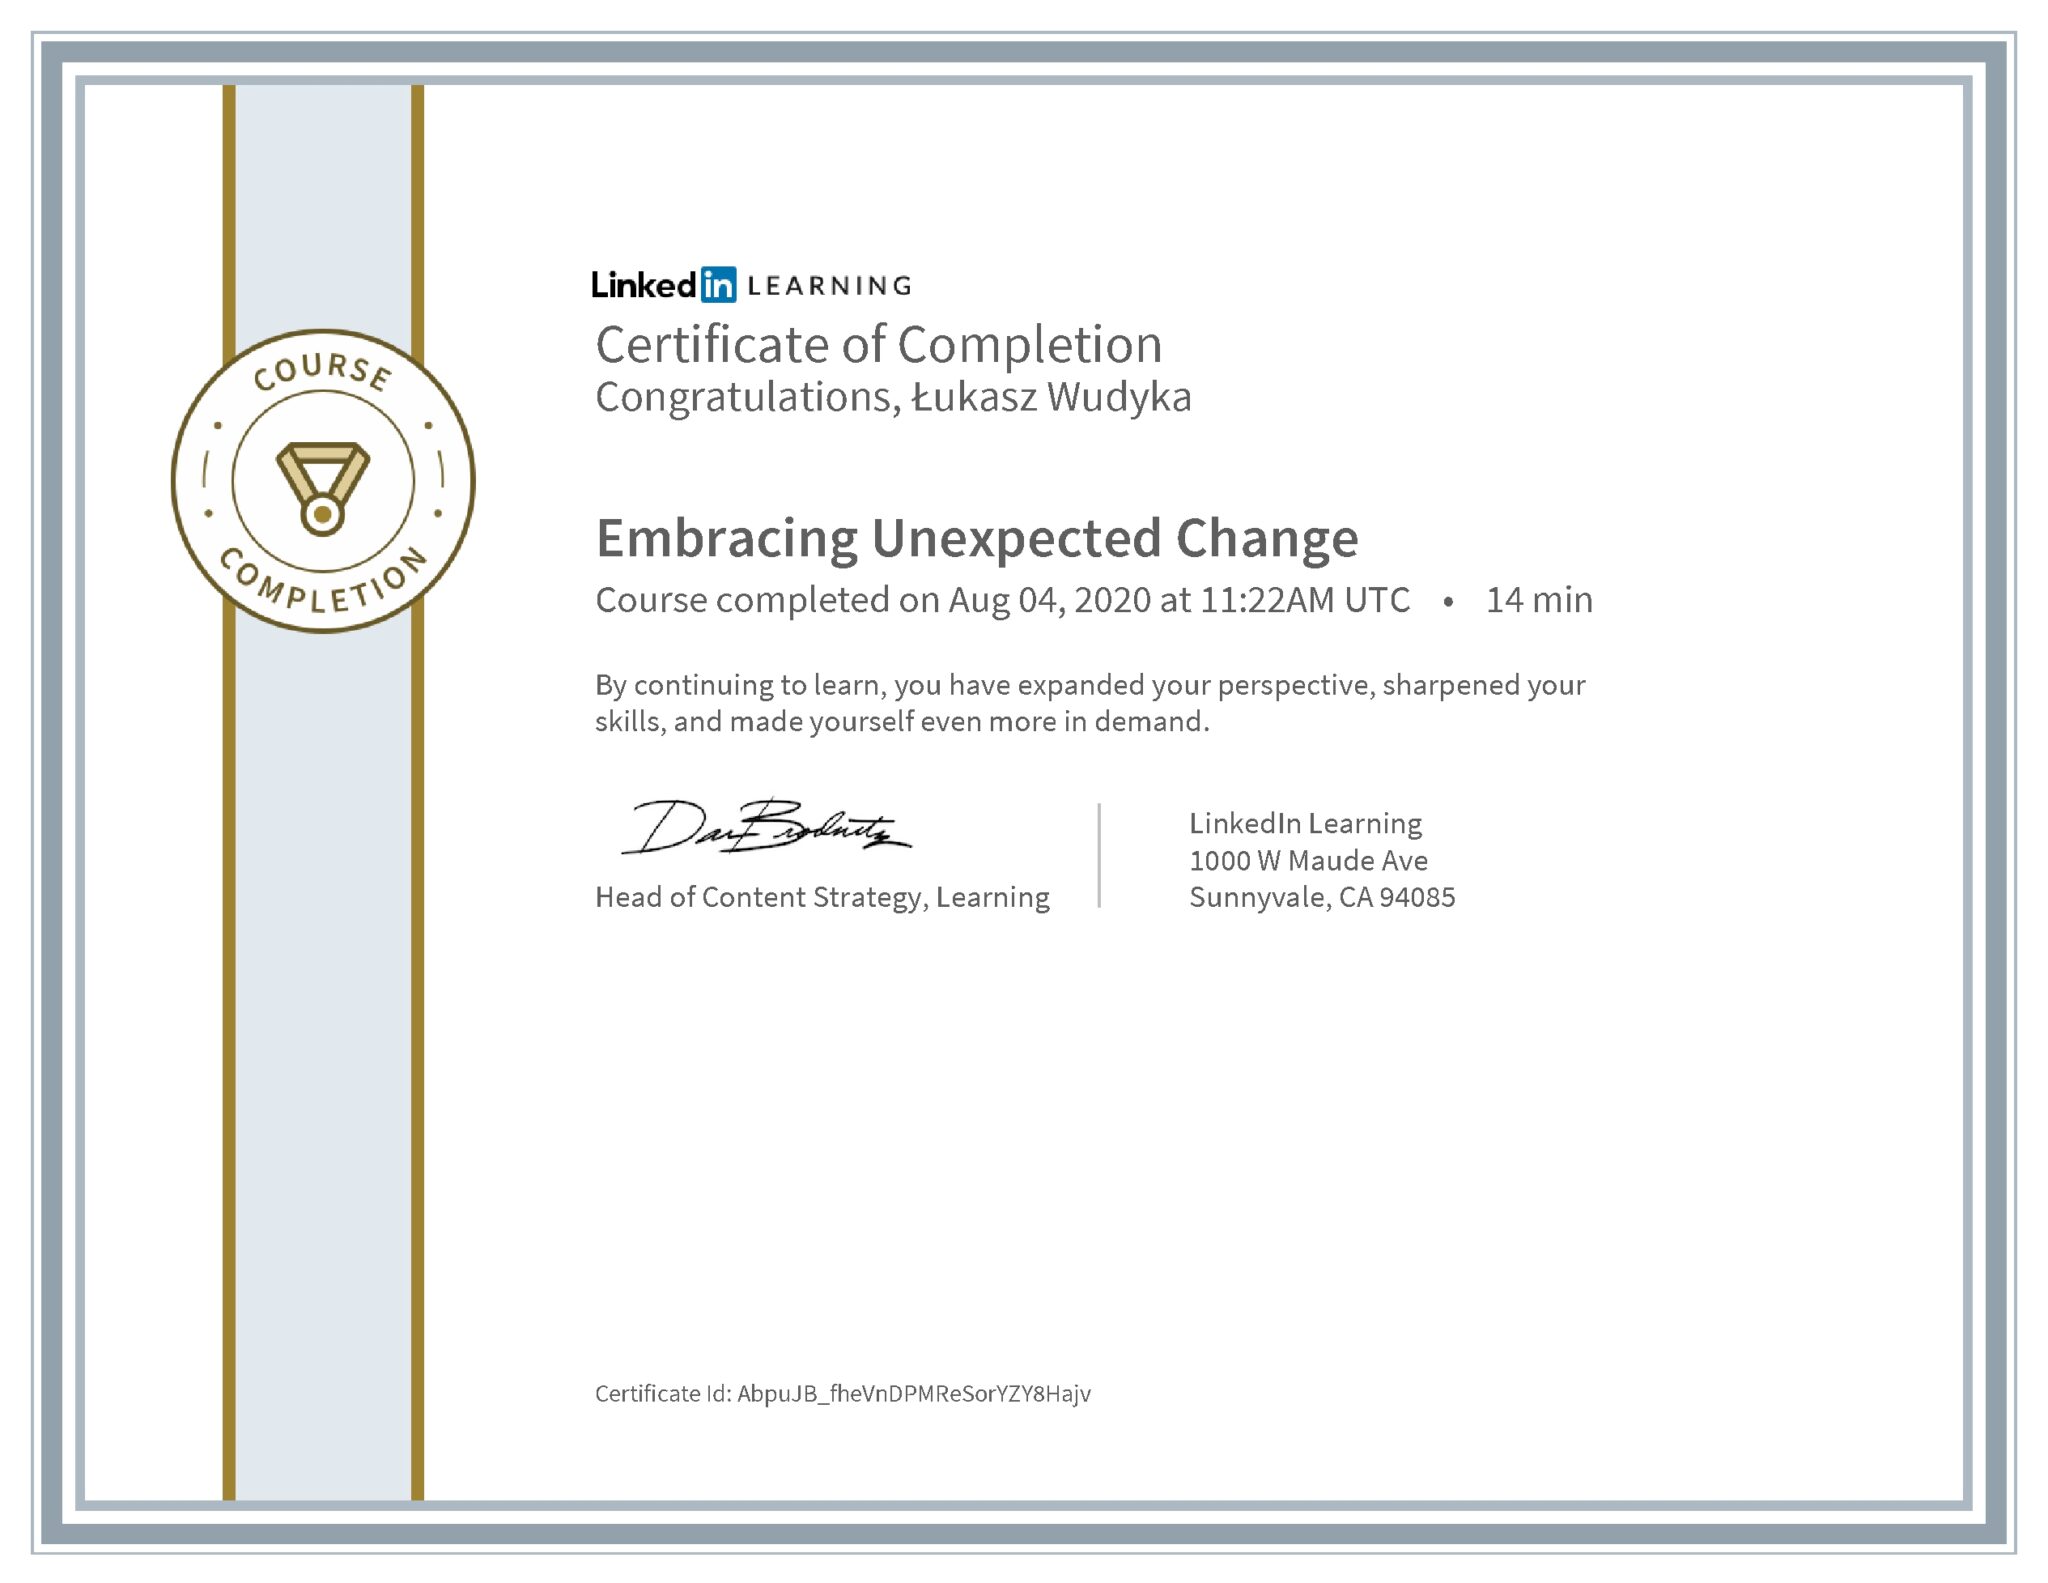 Łukasz Wudyka certyfikat LinkedIn Embracing Unexpected Change